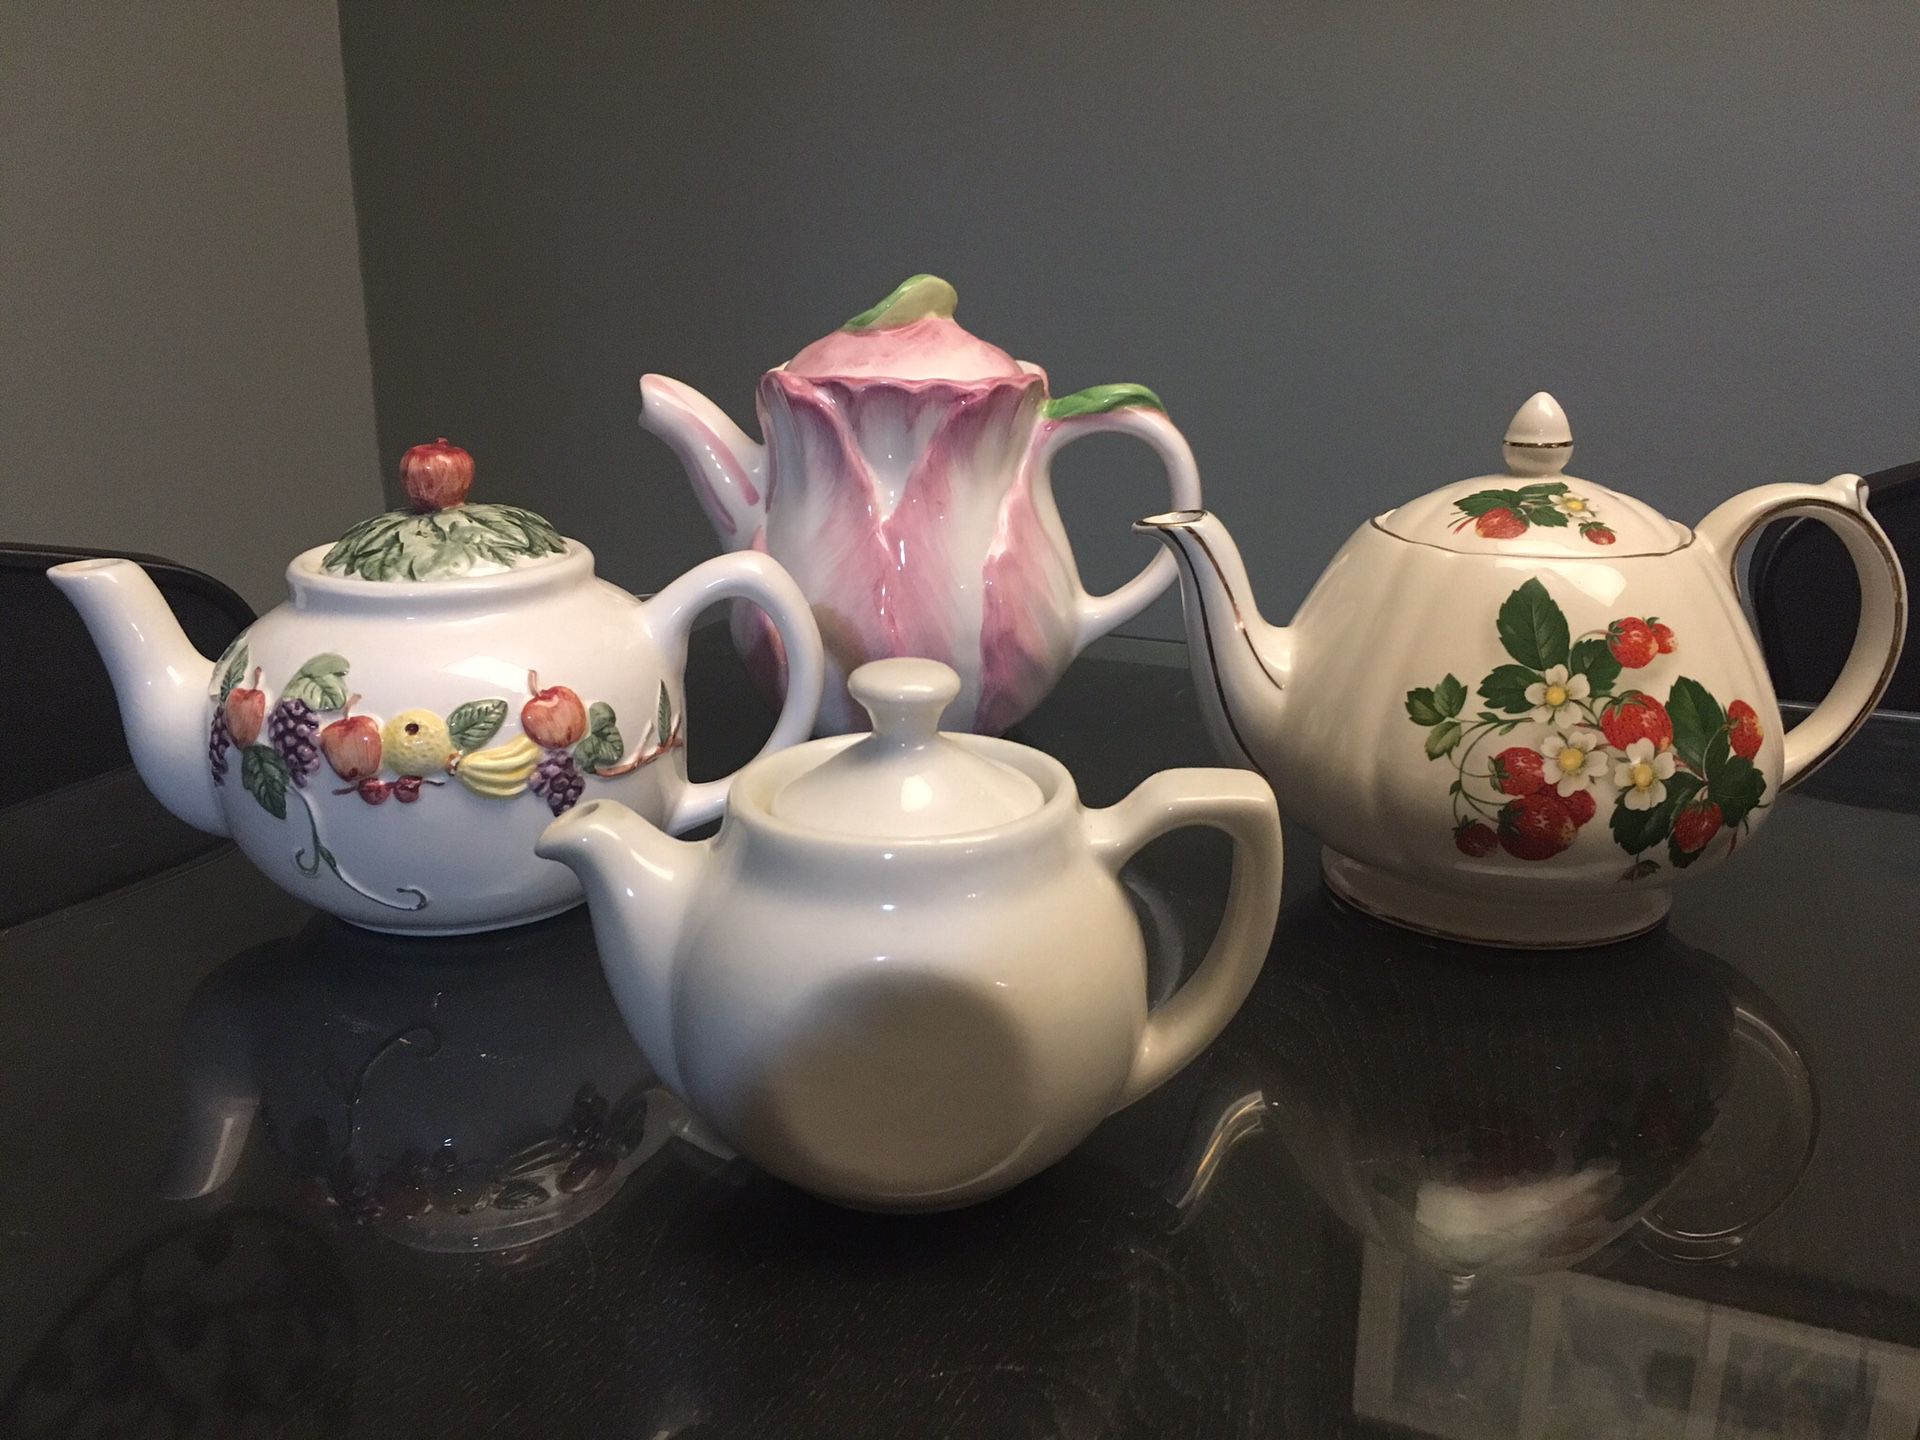 Vintage assorted tea pots, tea cups, tea plates, and pitchers